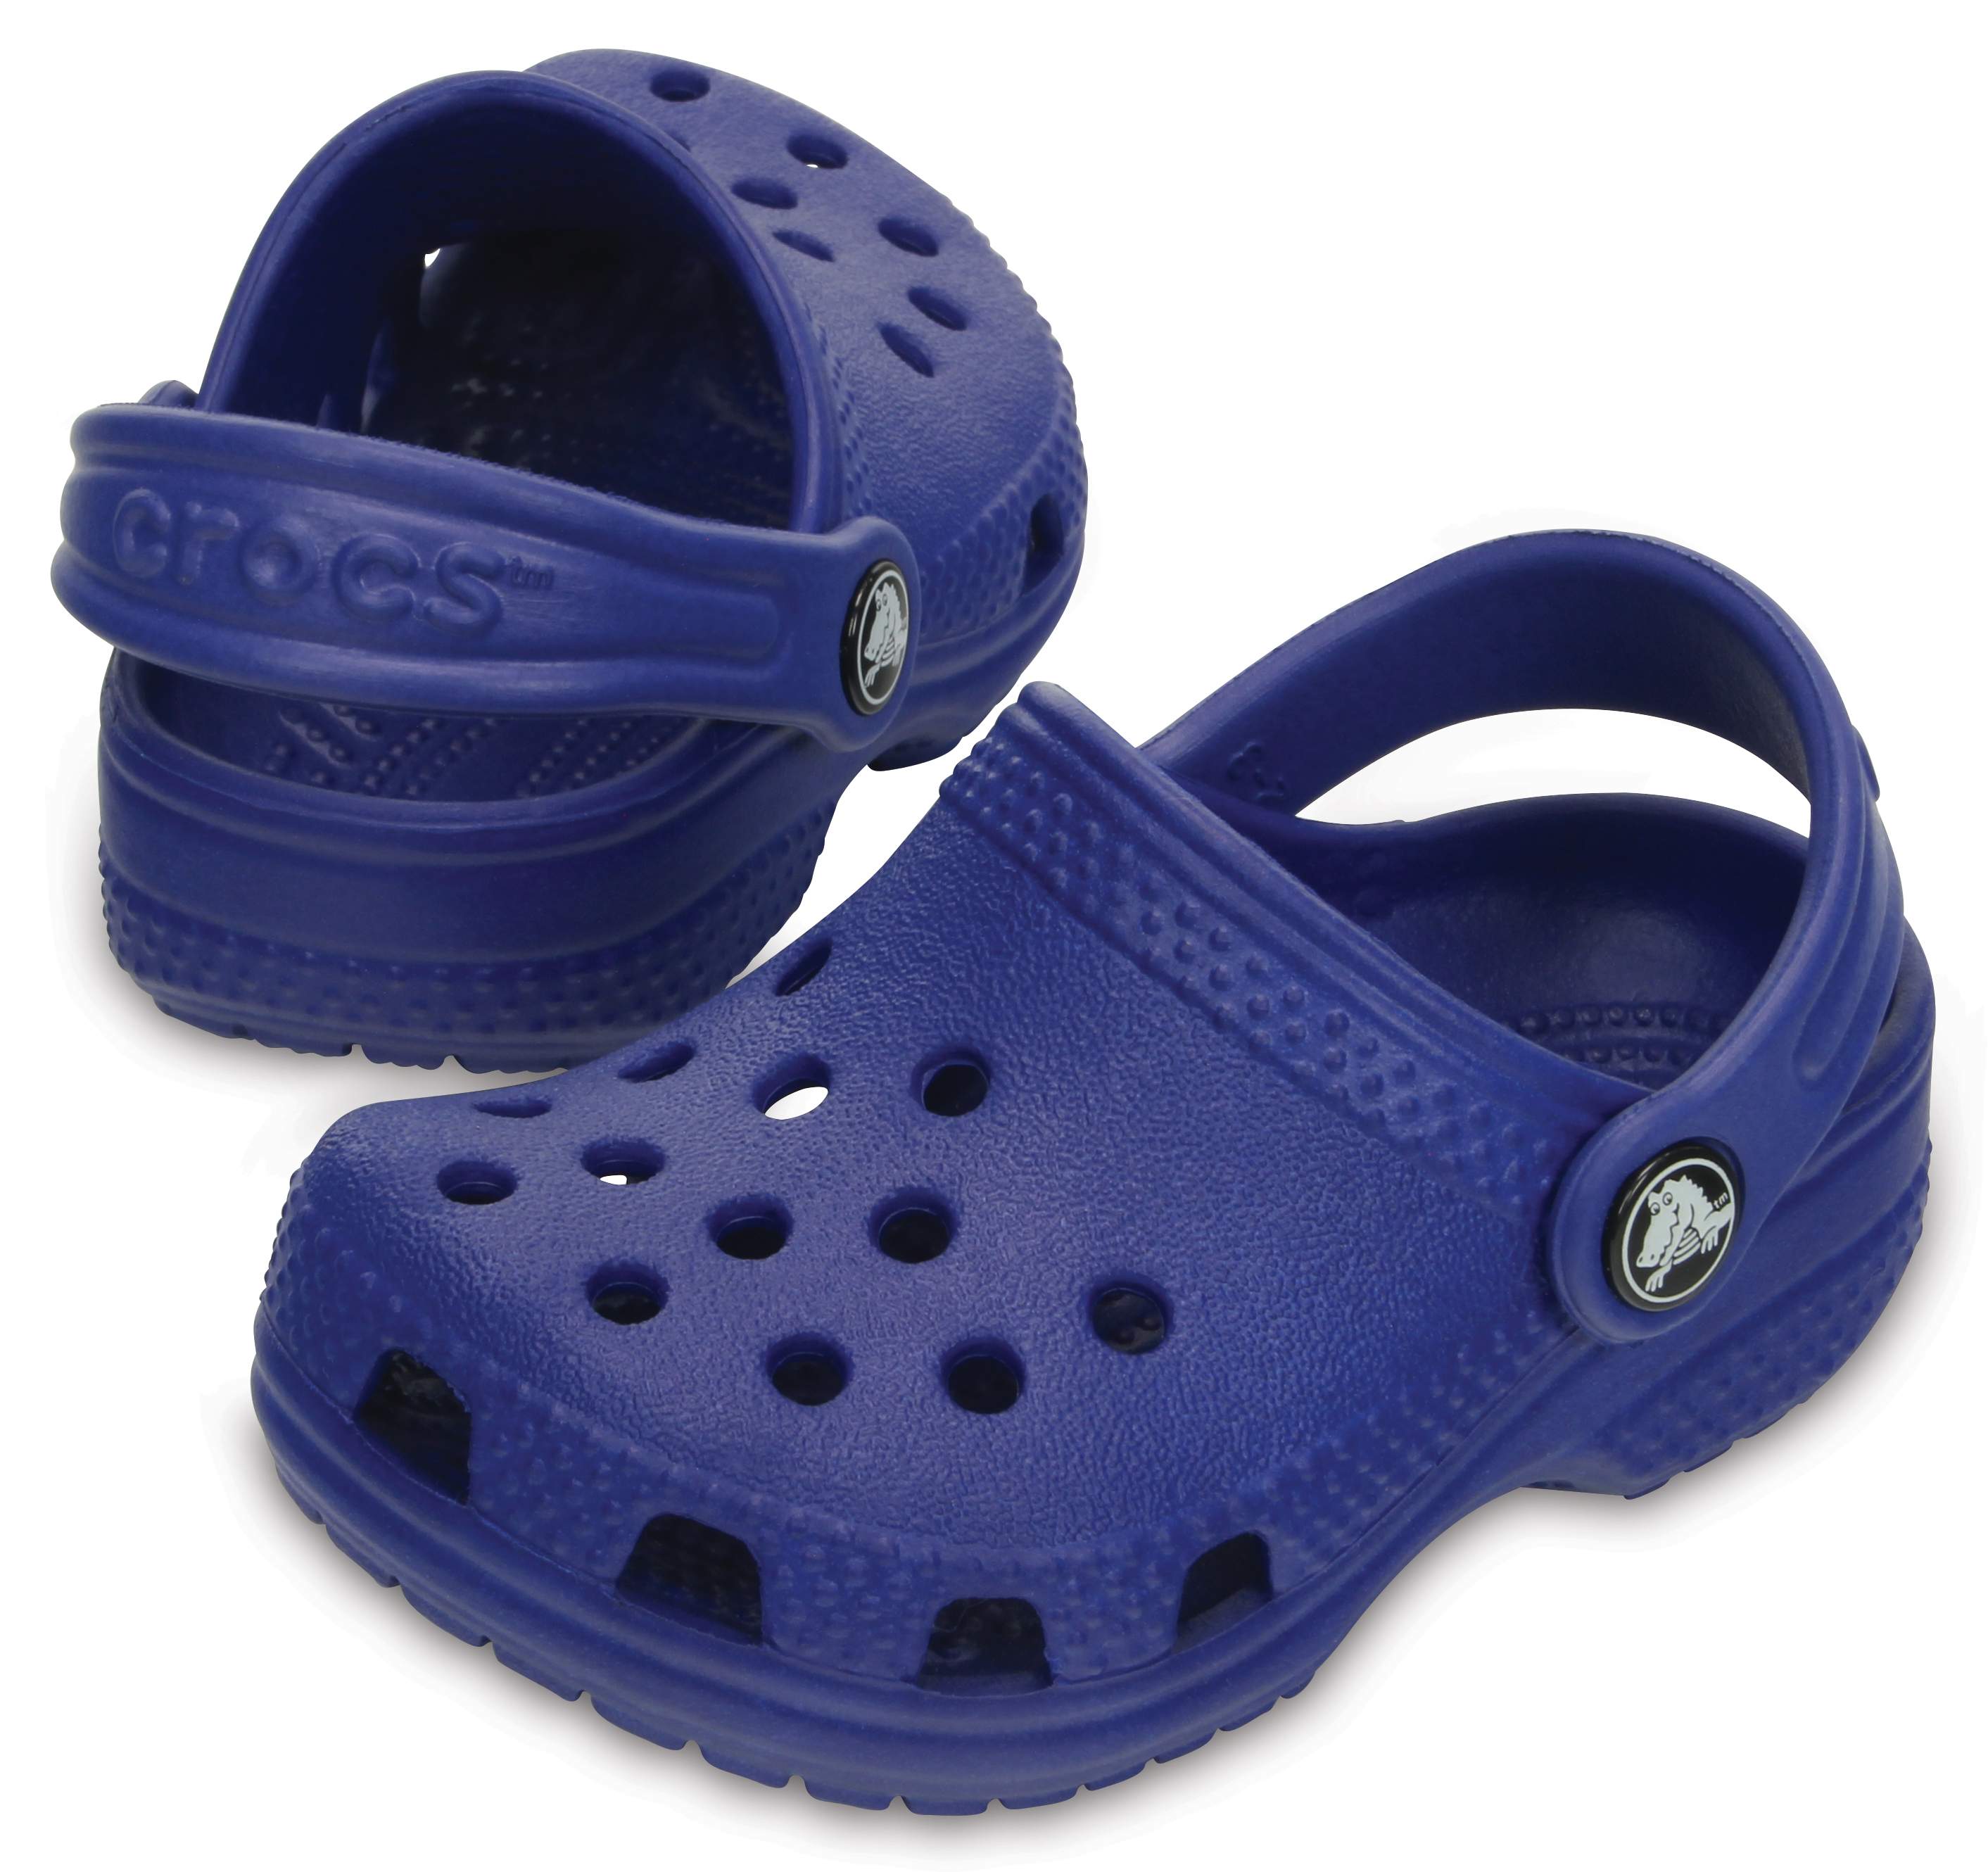 toddler size 11 crocs